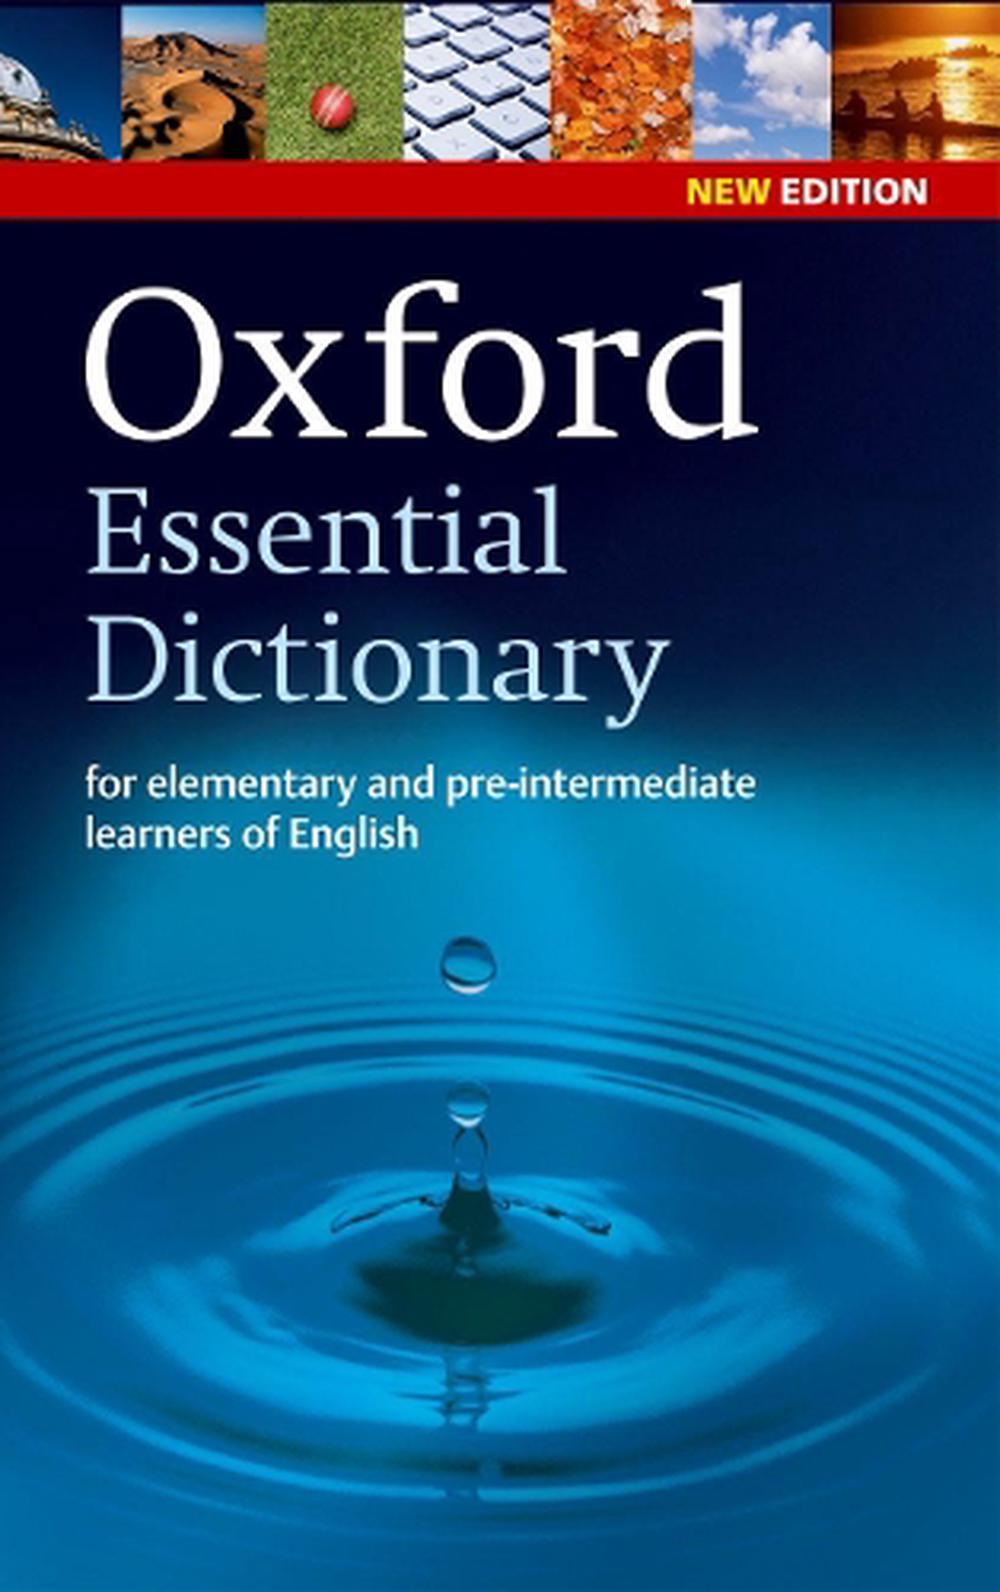 oxford dictionaries